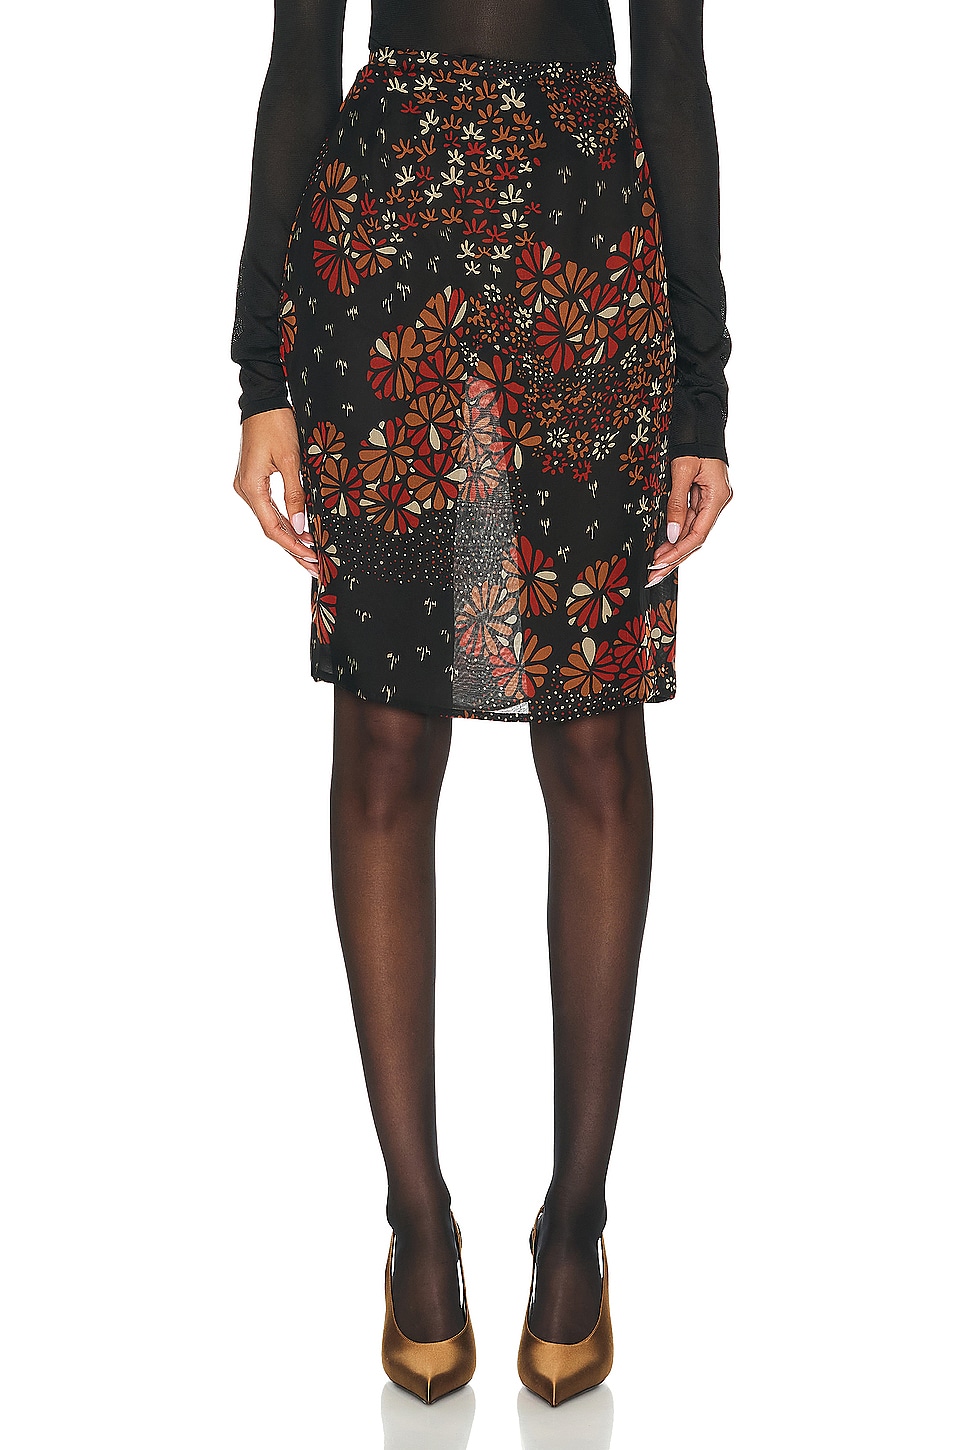 Saint Laurent Floral Skirt in Black